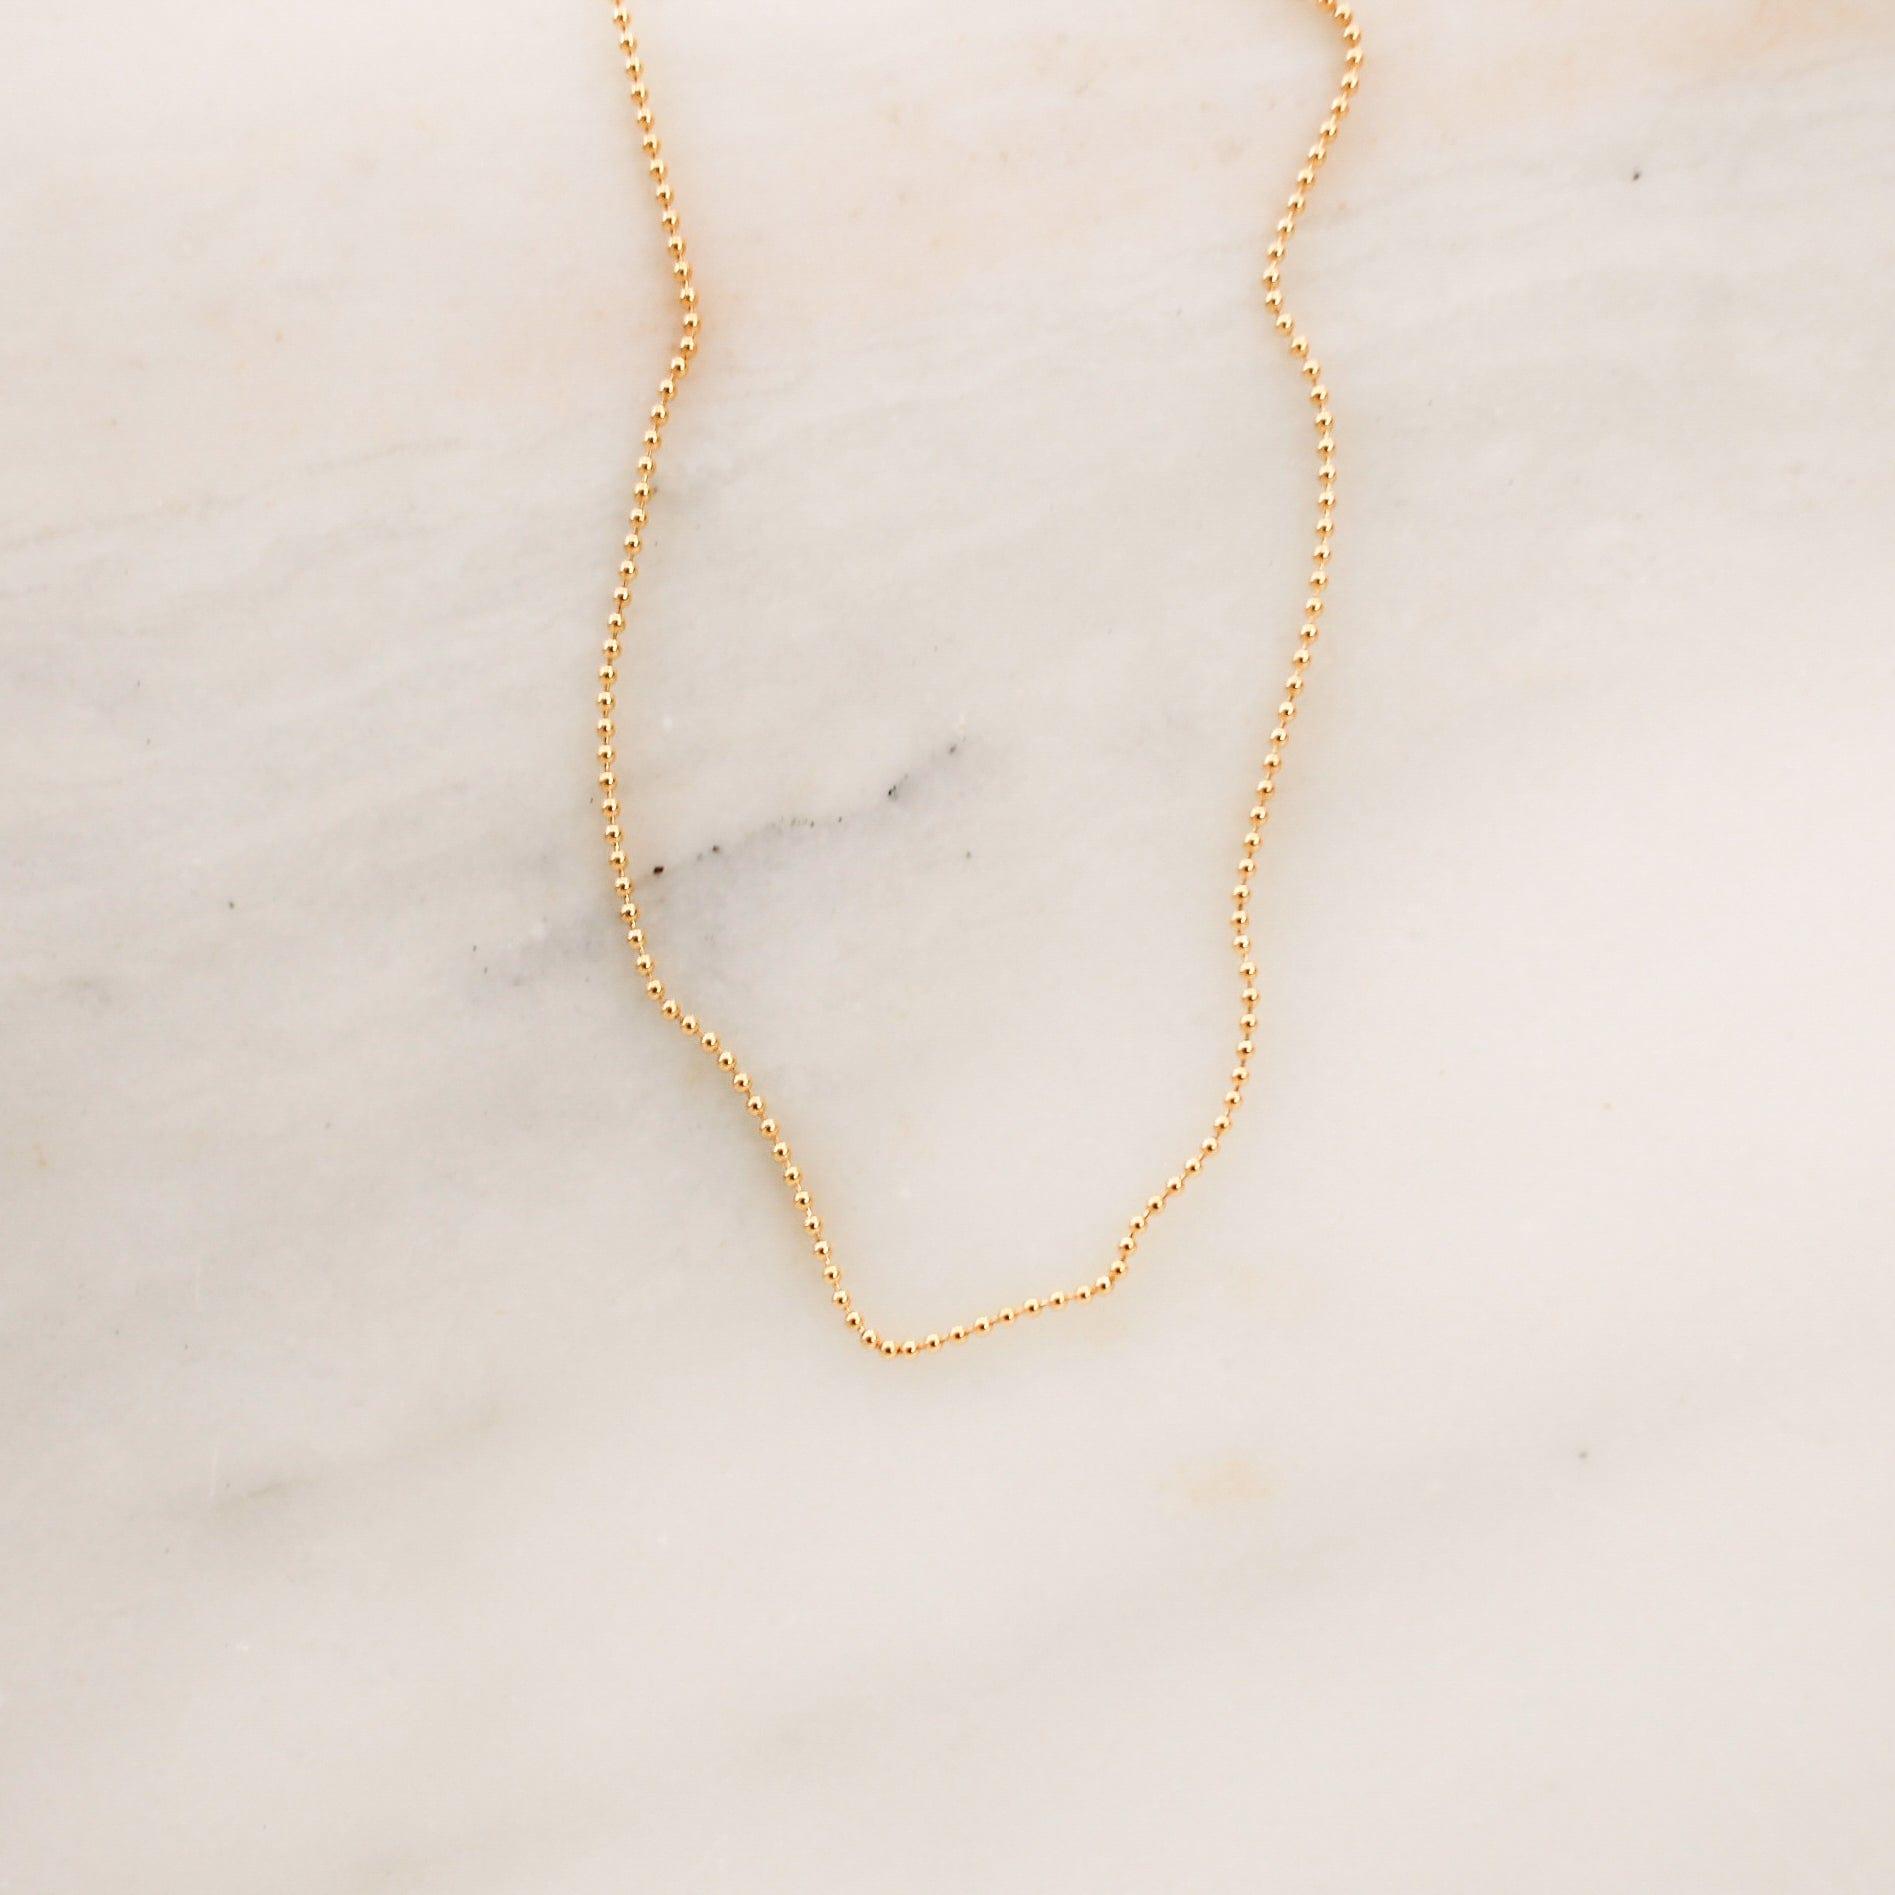 Thin Nova Bead Necklace - Nolia Jewelry - Meaningful + Sustainably Handcrafted Jewelry